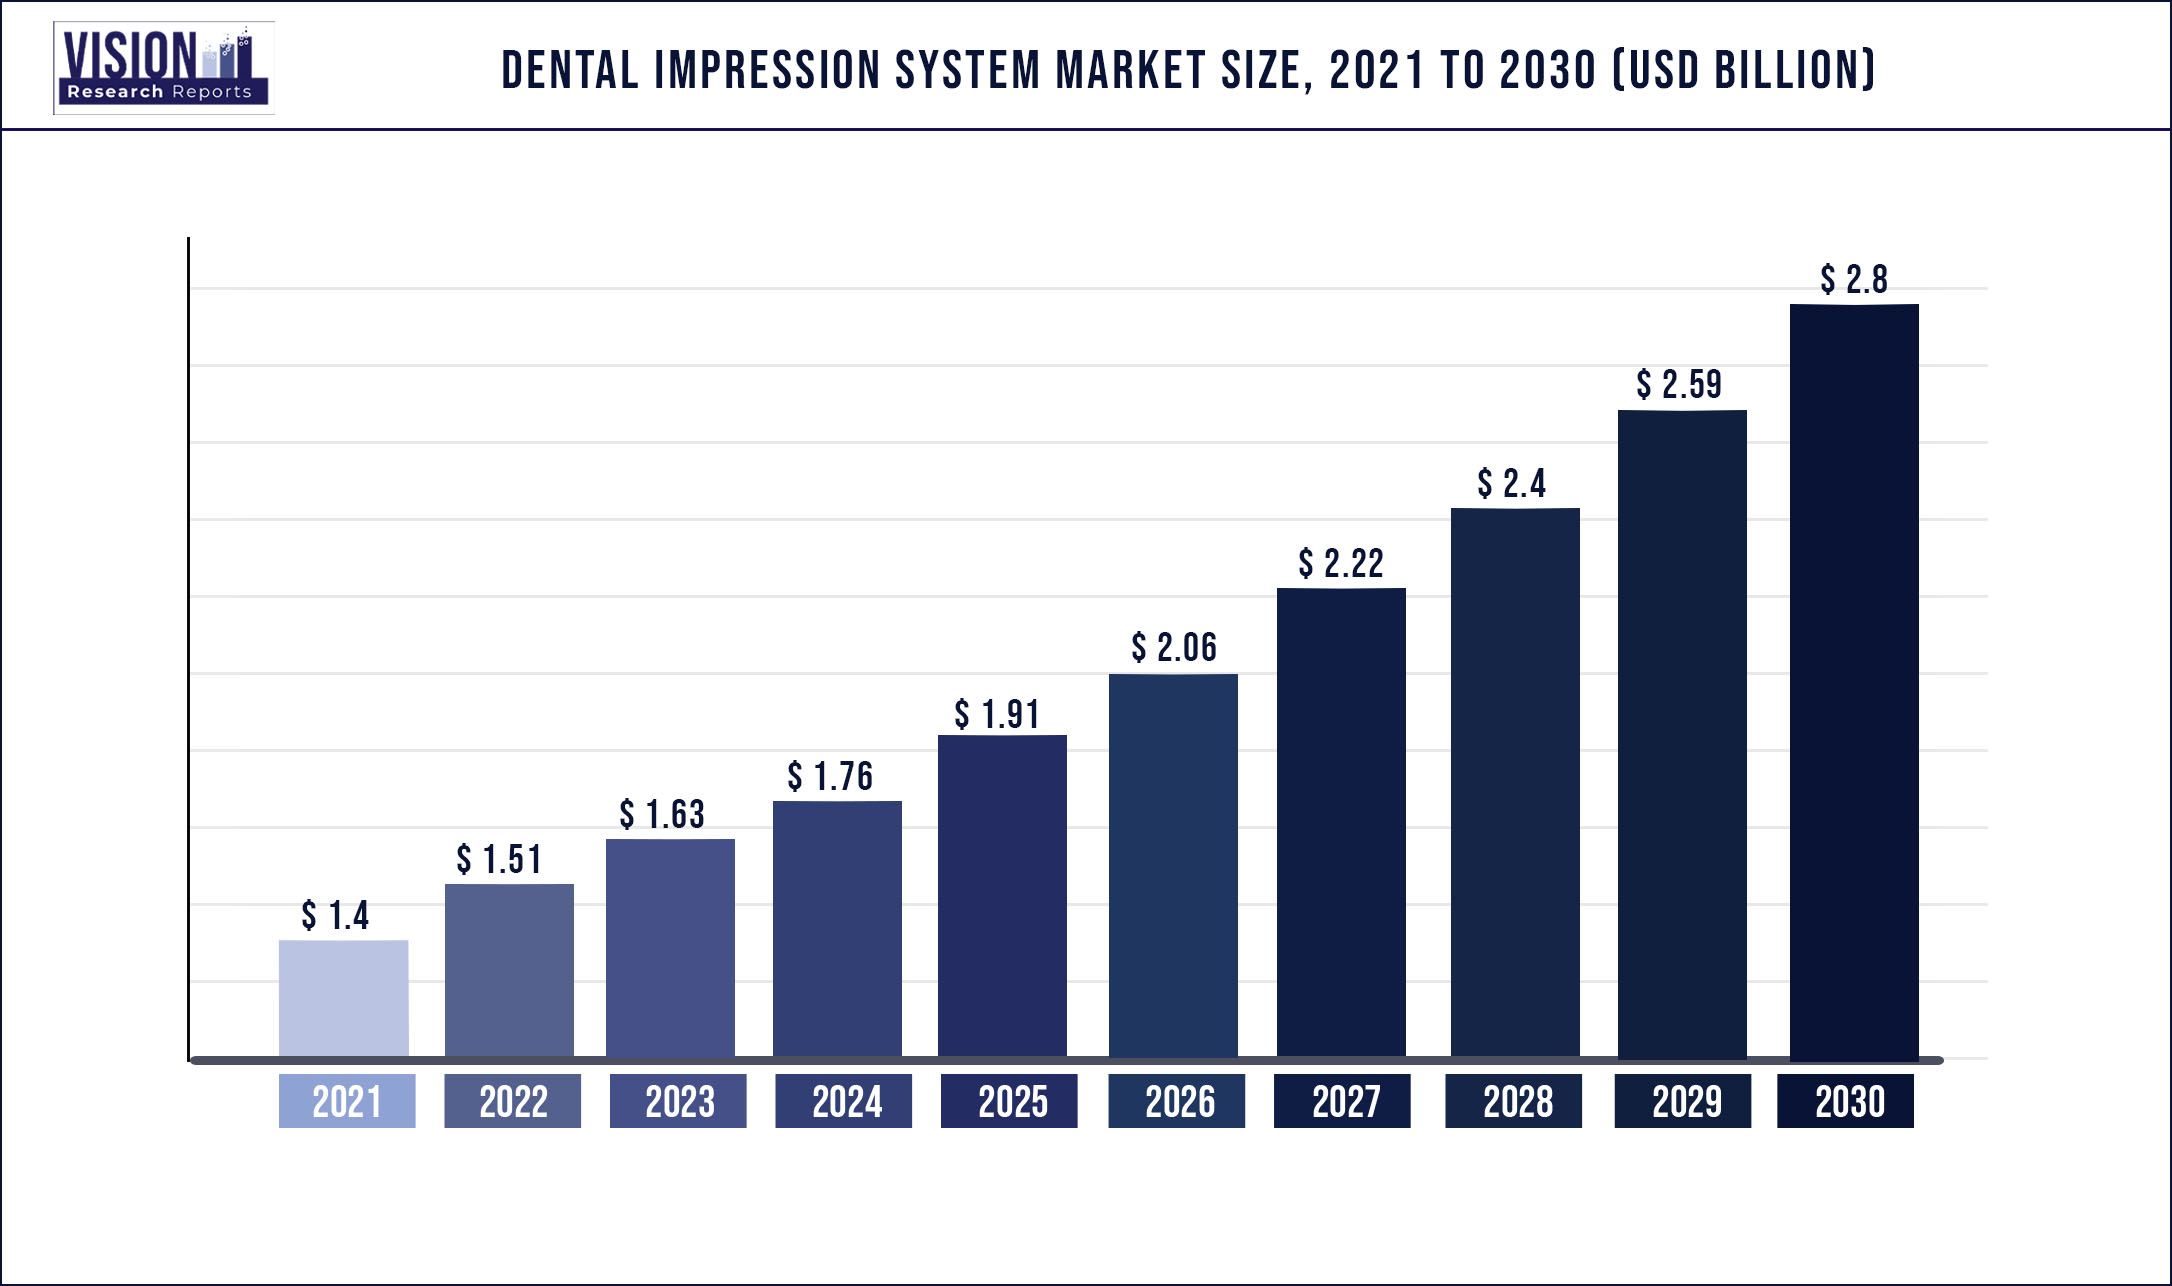 Dental Impression System Market Size 2021 to 2030